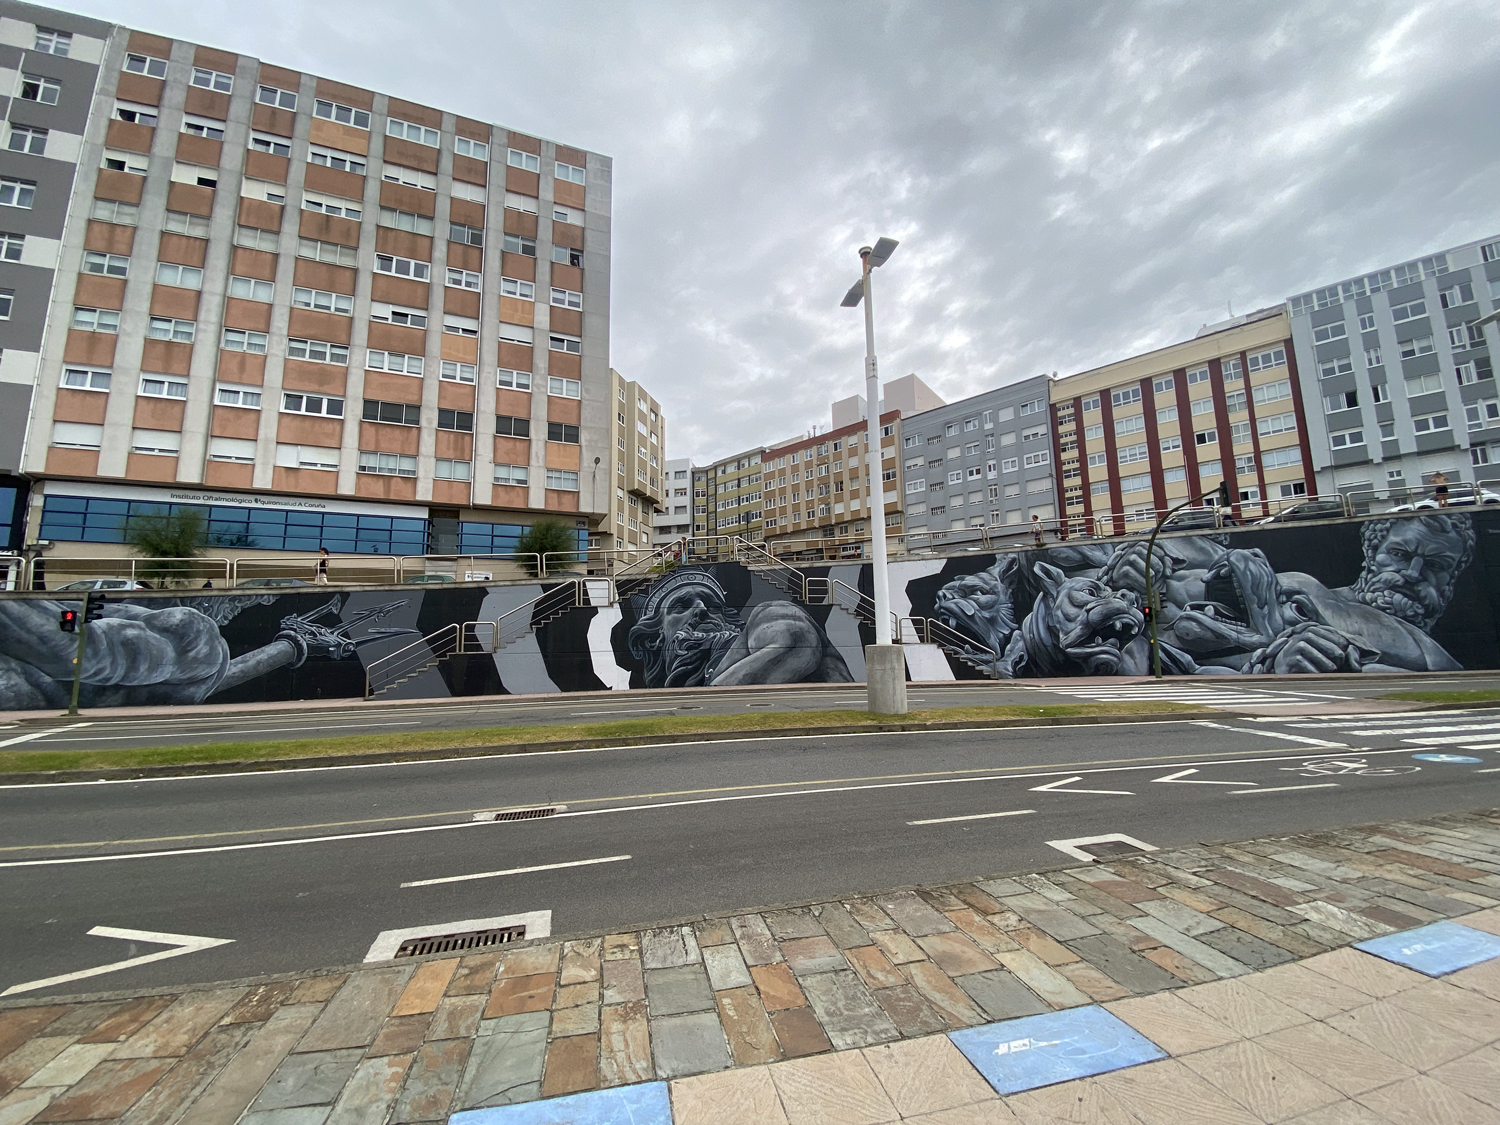 arte urbano, Diego As, Paseo marítimo la Coruña